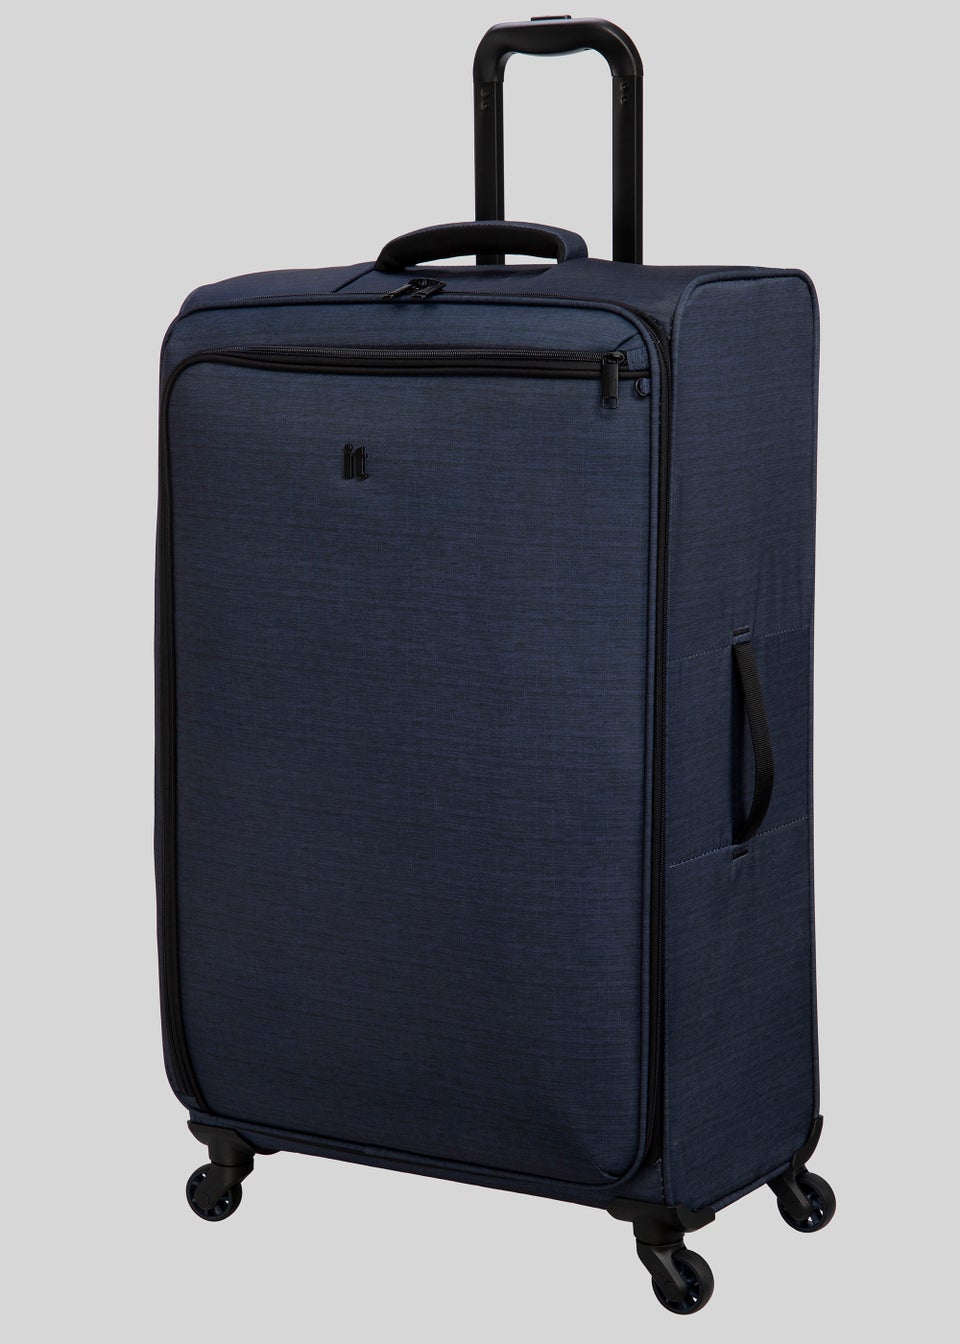 IT Luggage Navy Soft Shell Suitcase